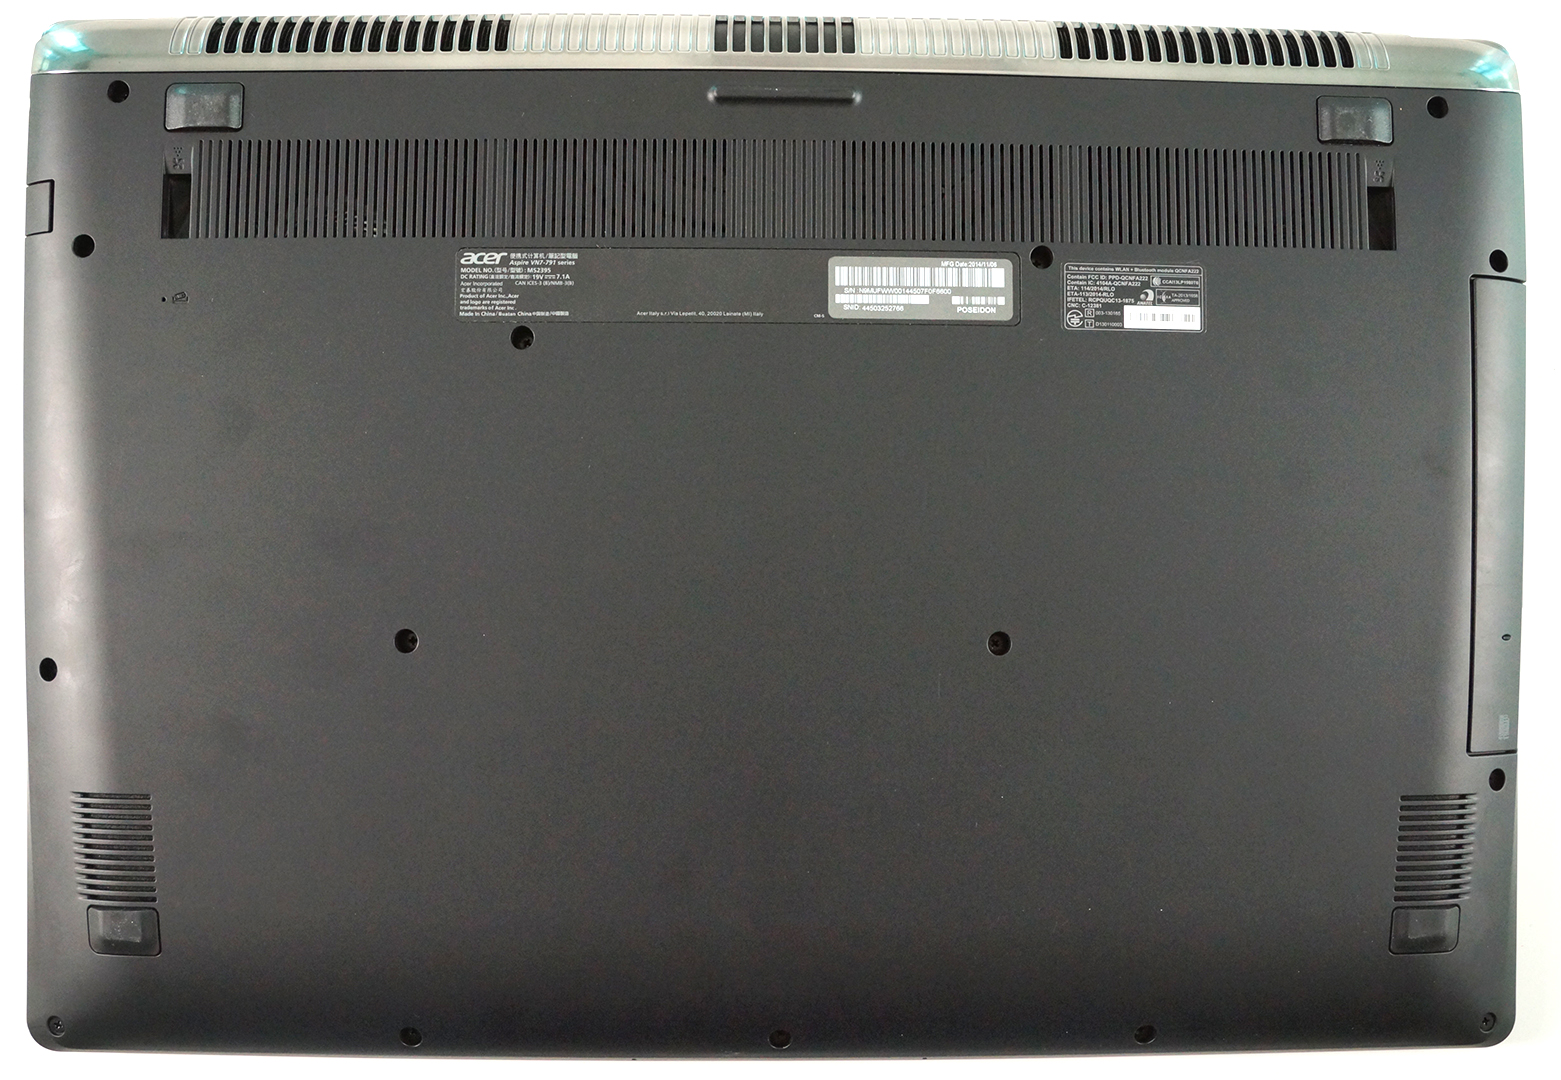 Acer Aspire V17 Nitro Black Edition (VN-791G) with Intel RealSense